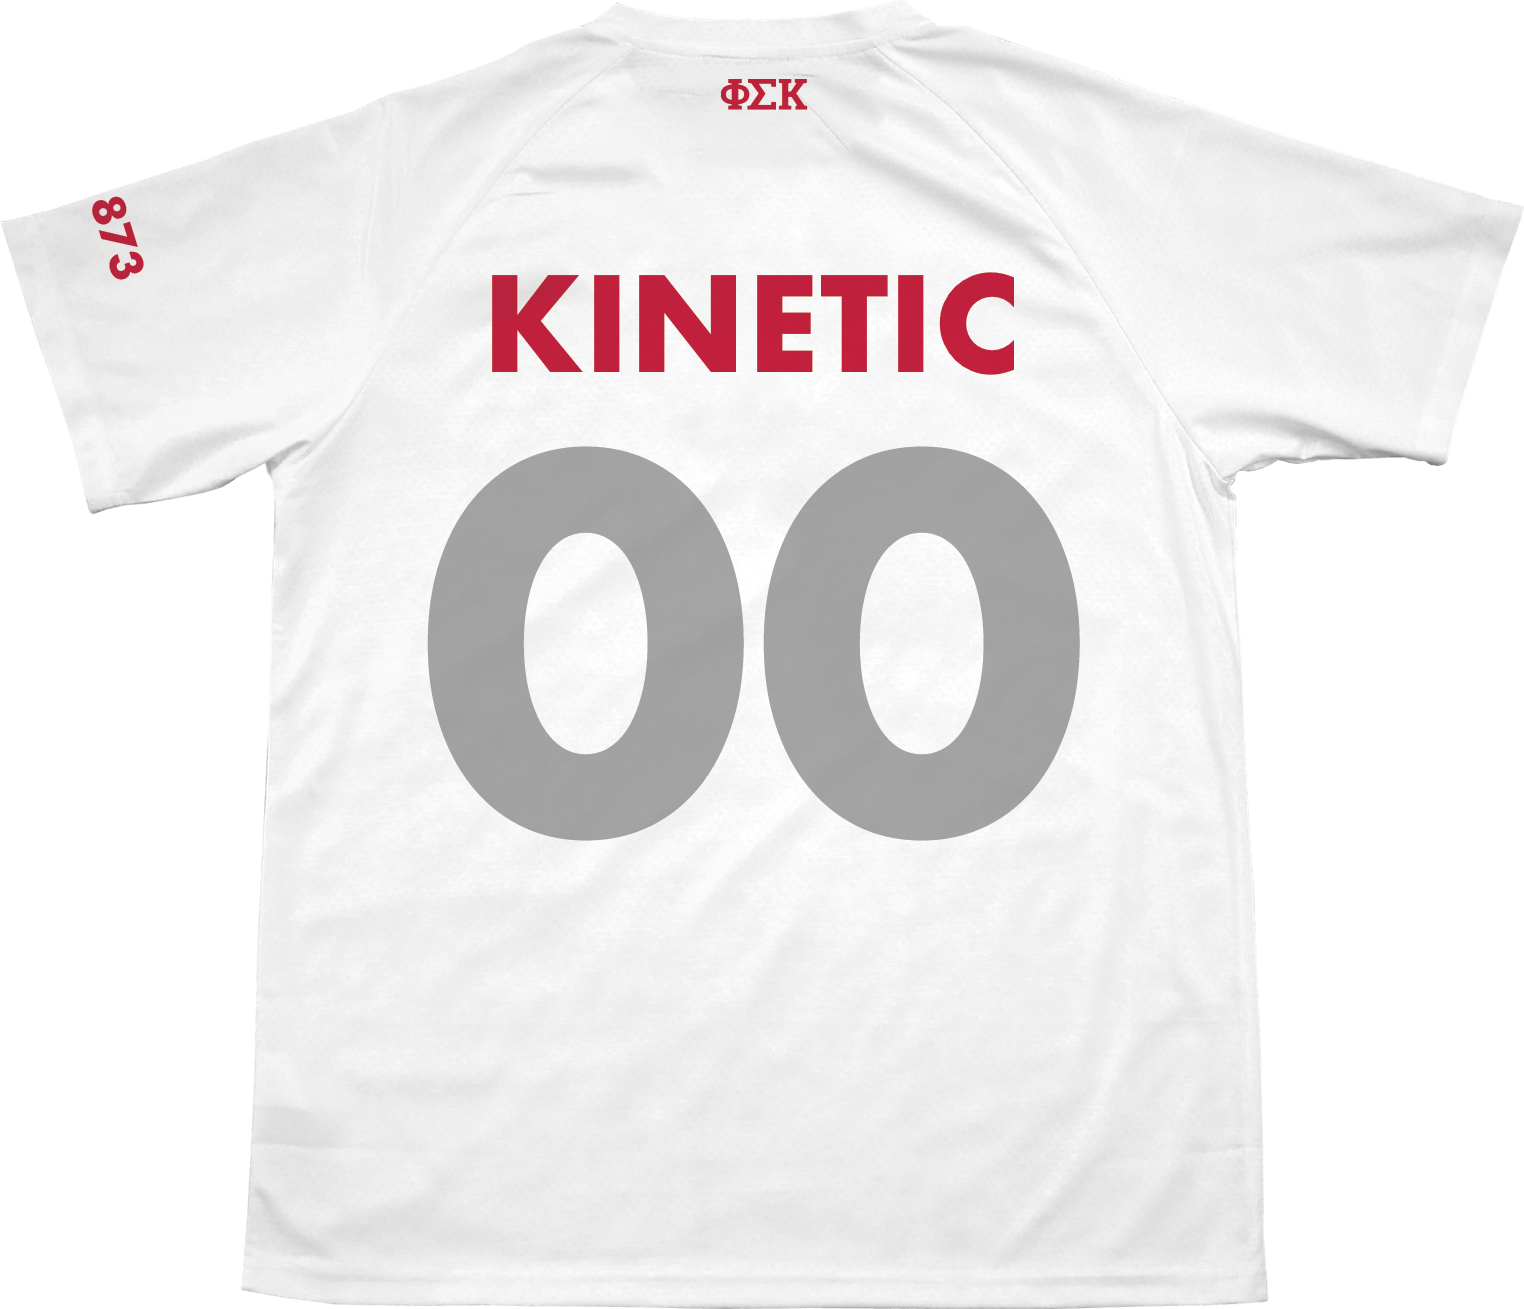 Phi Sigma Kappa - Home Team Soccer Jersey - Kinetic Society